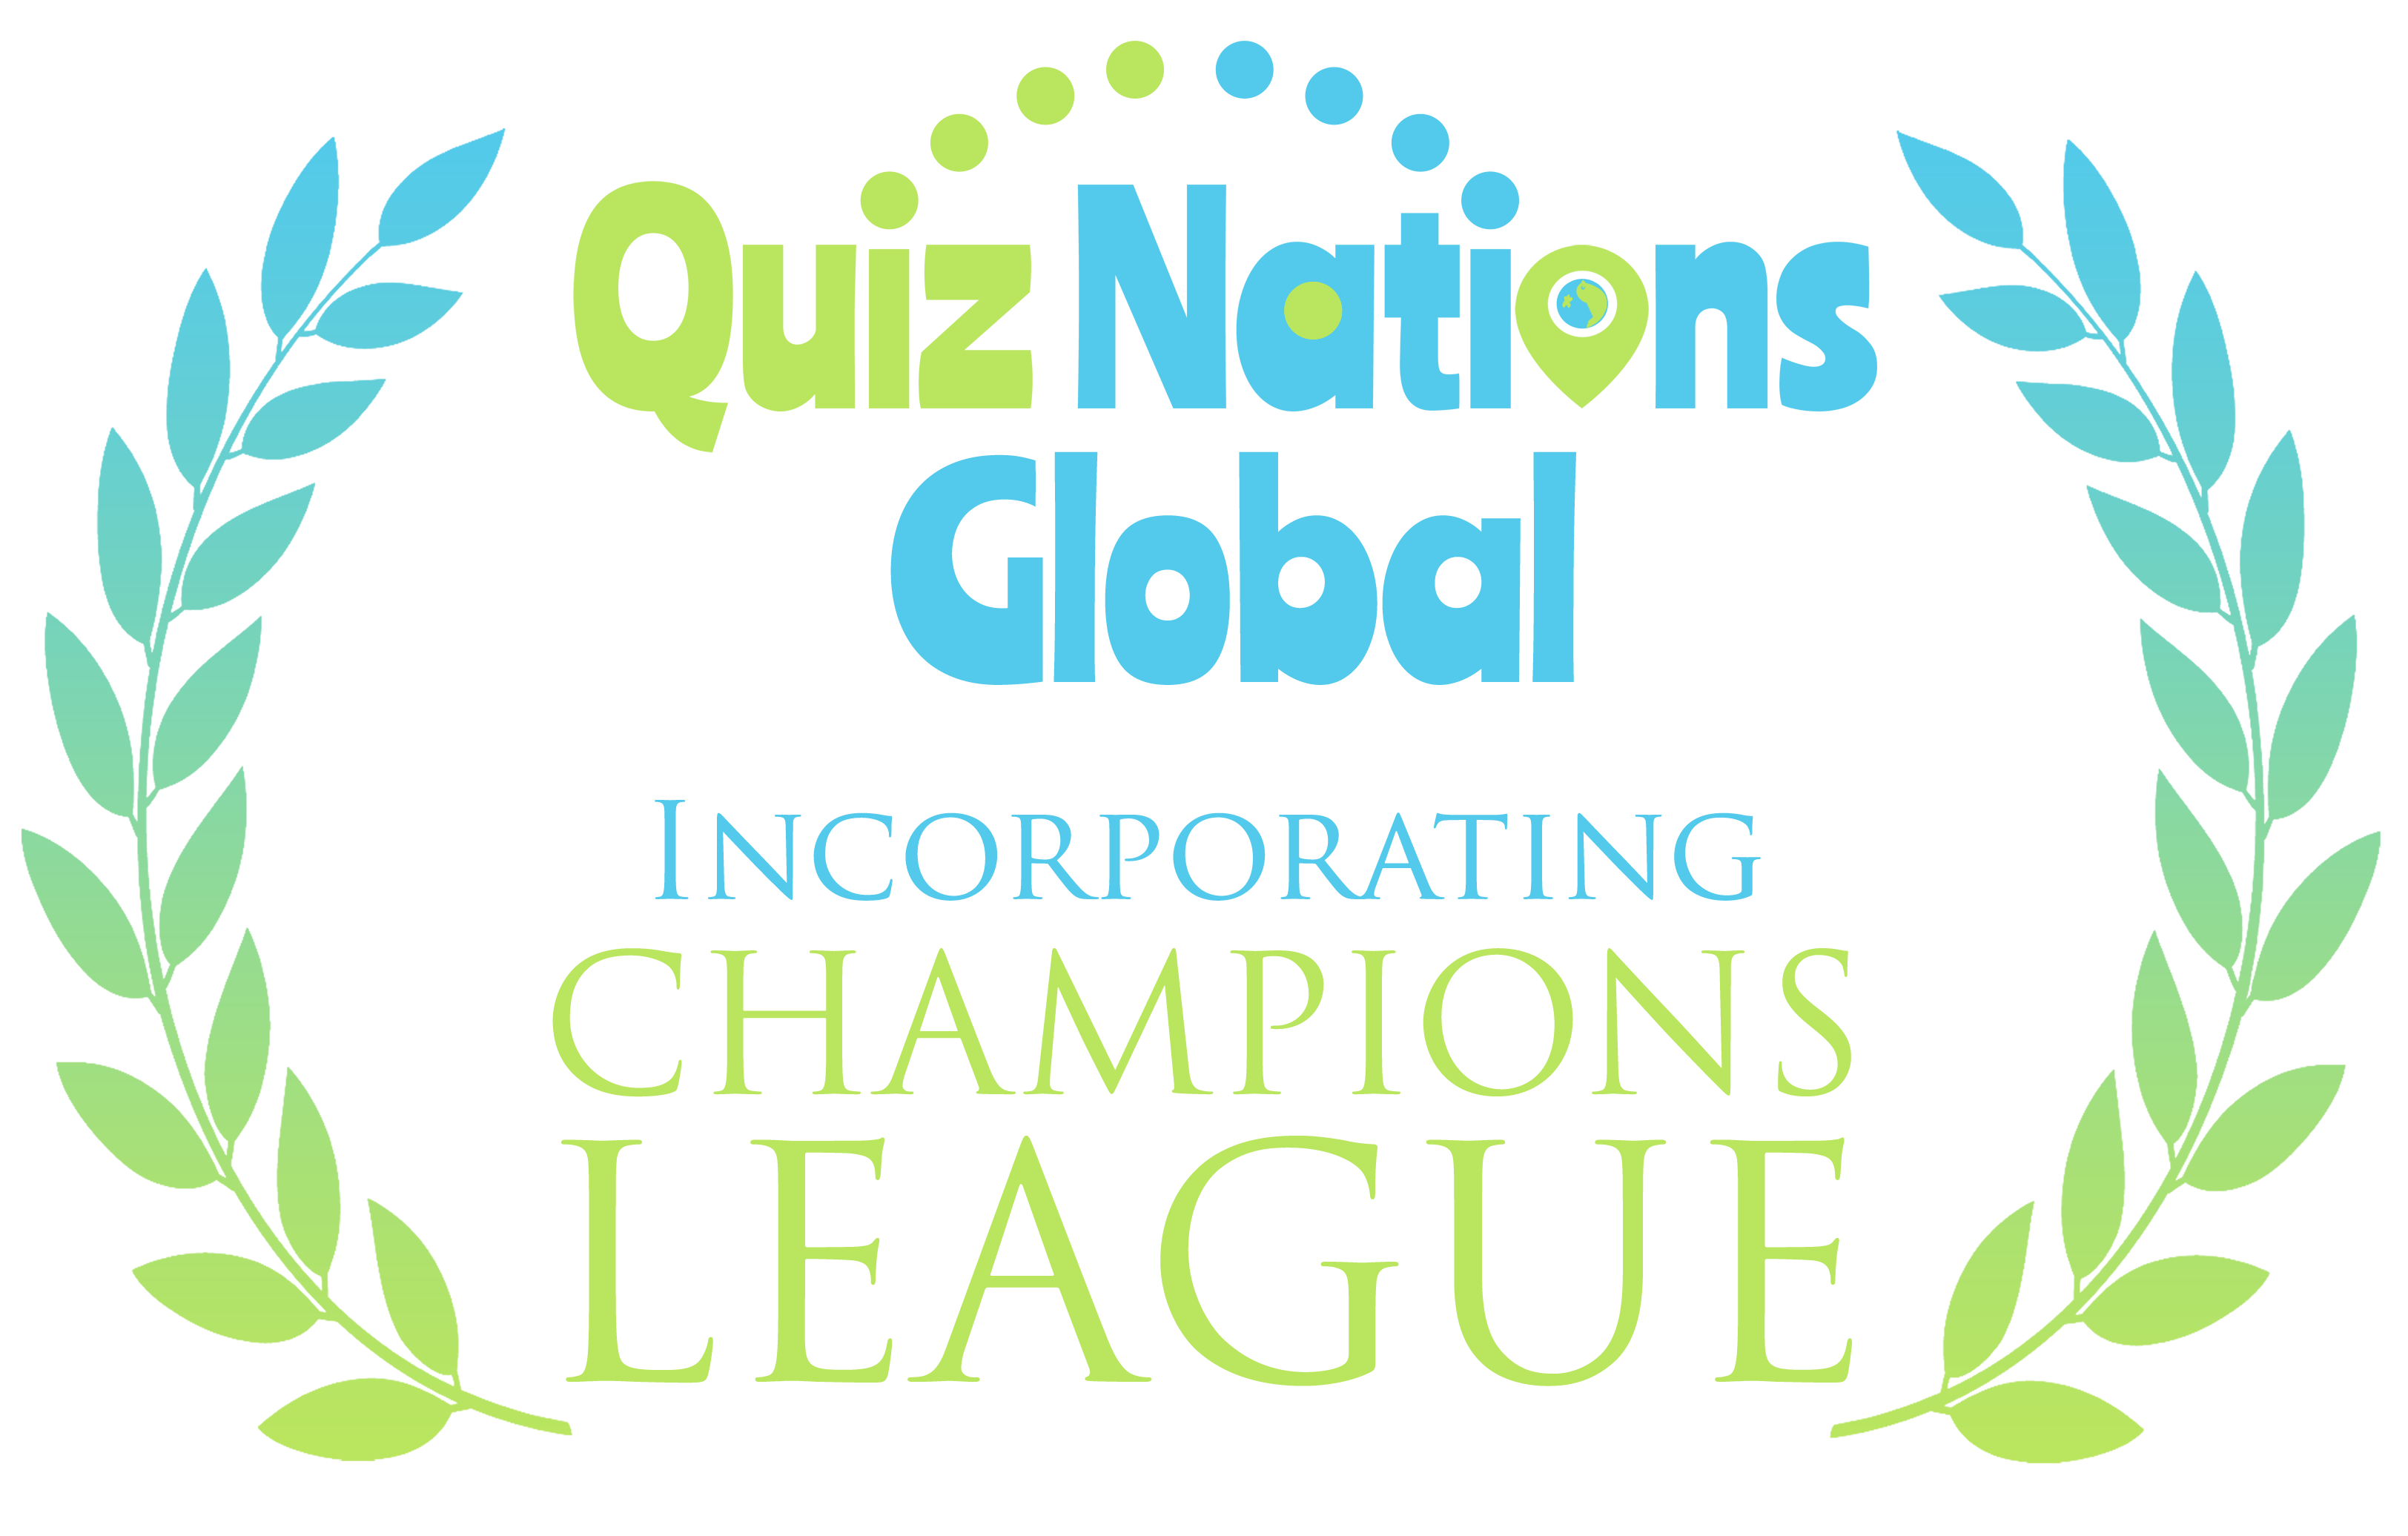 Quiz Nations Global